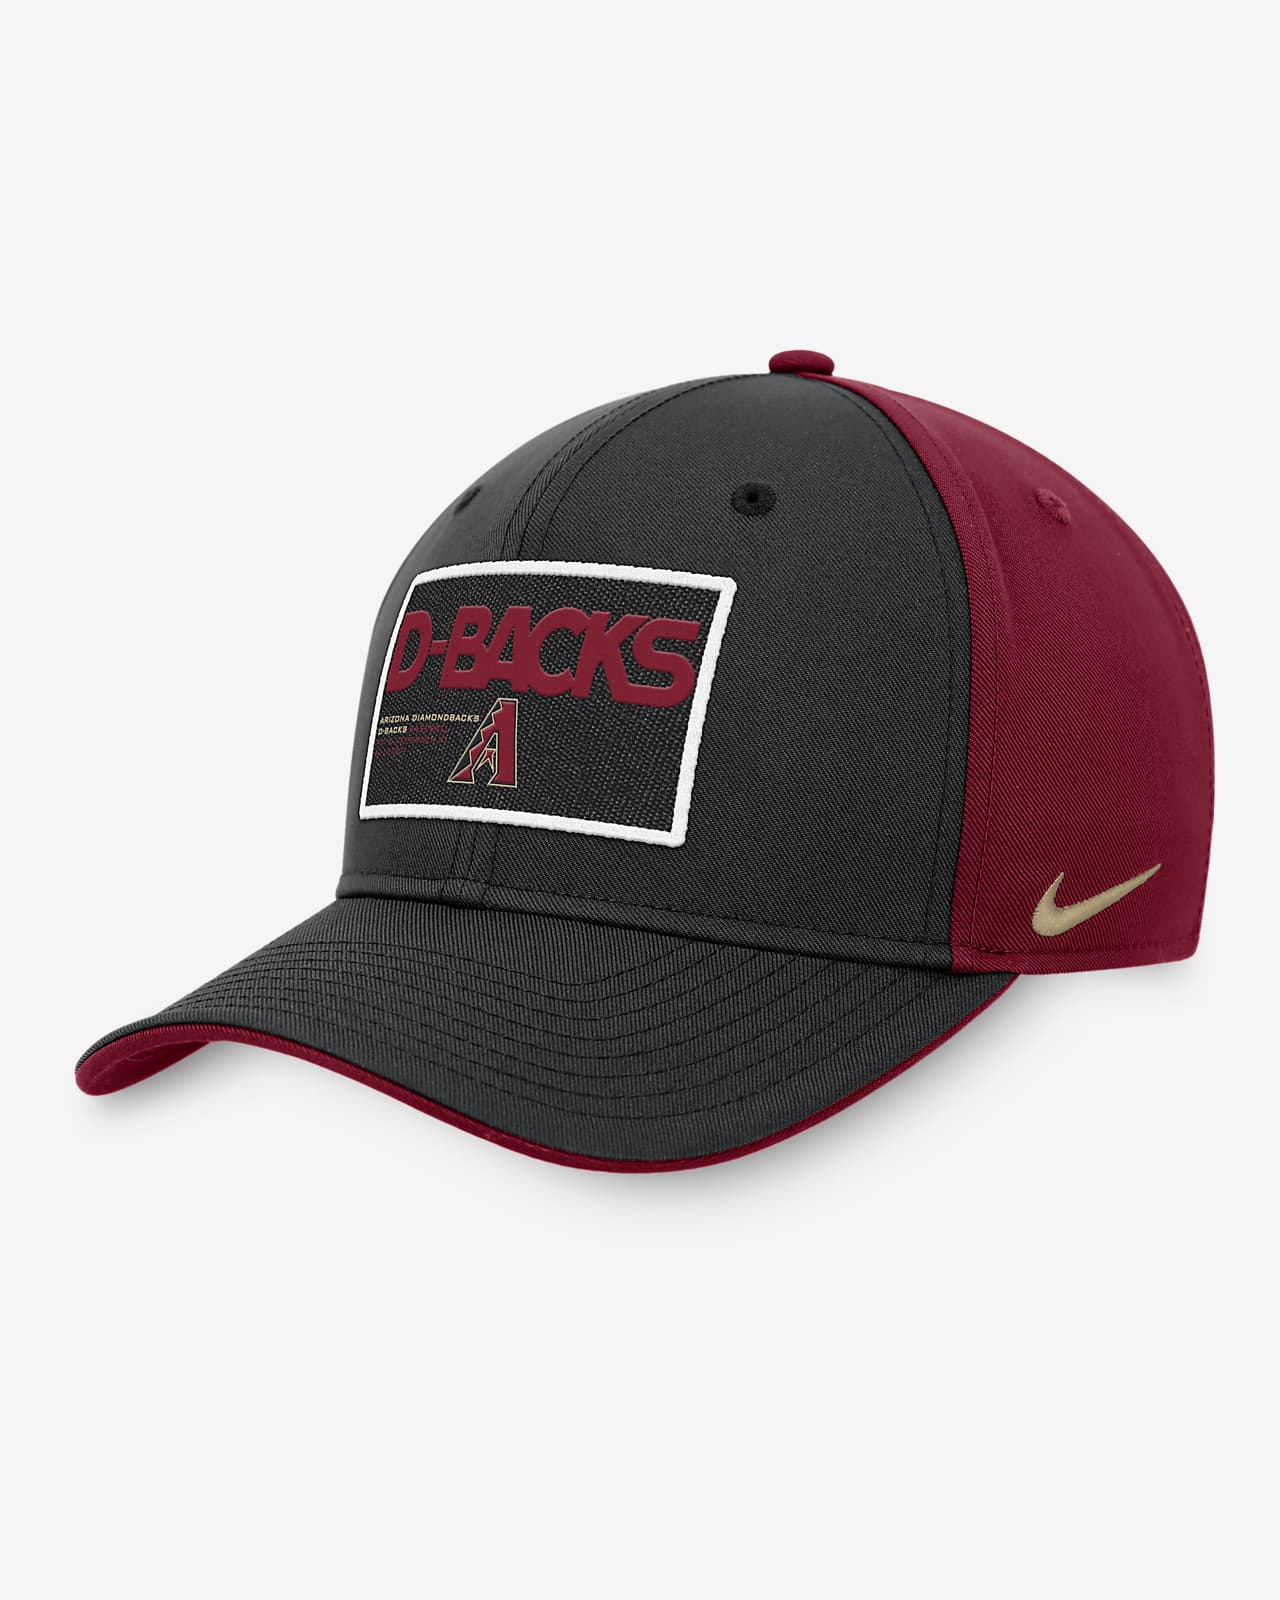 Arizona Diamondbacks Classic99 Color Block Men's Nike MLB Adjustable Hat.